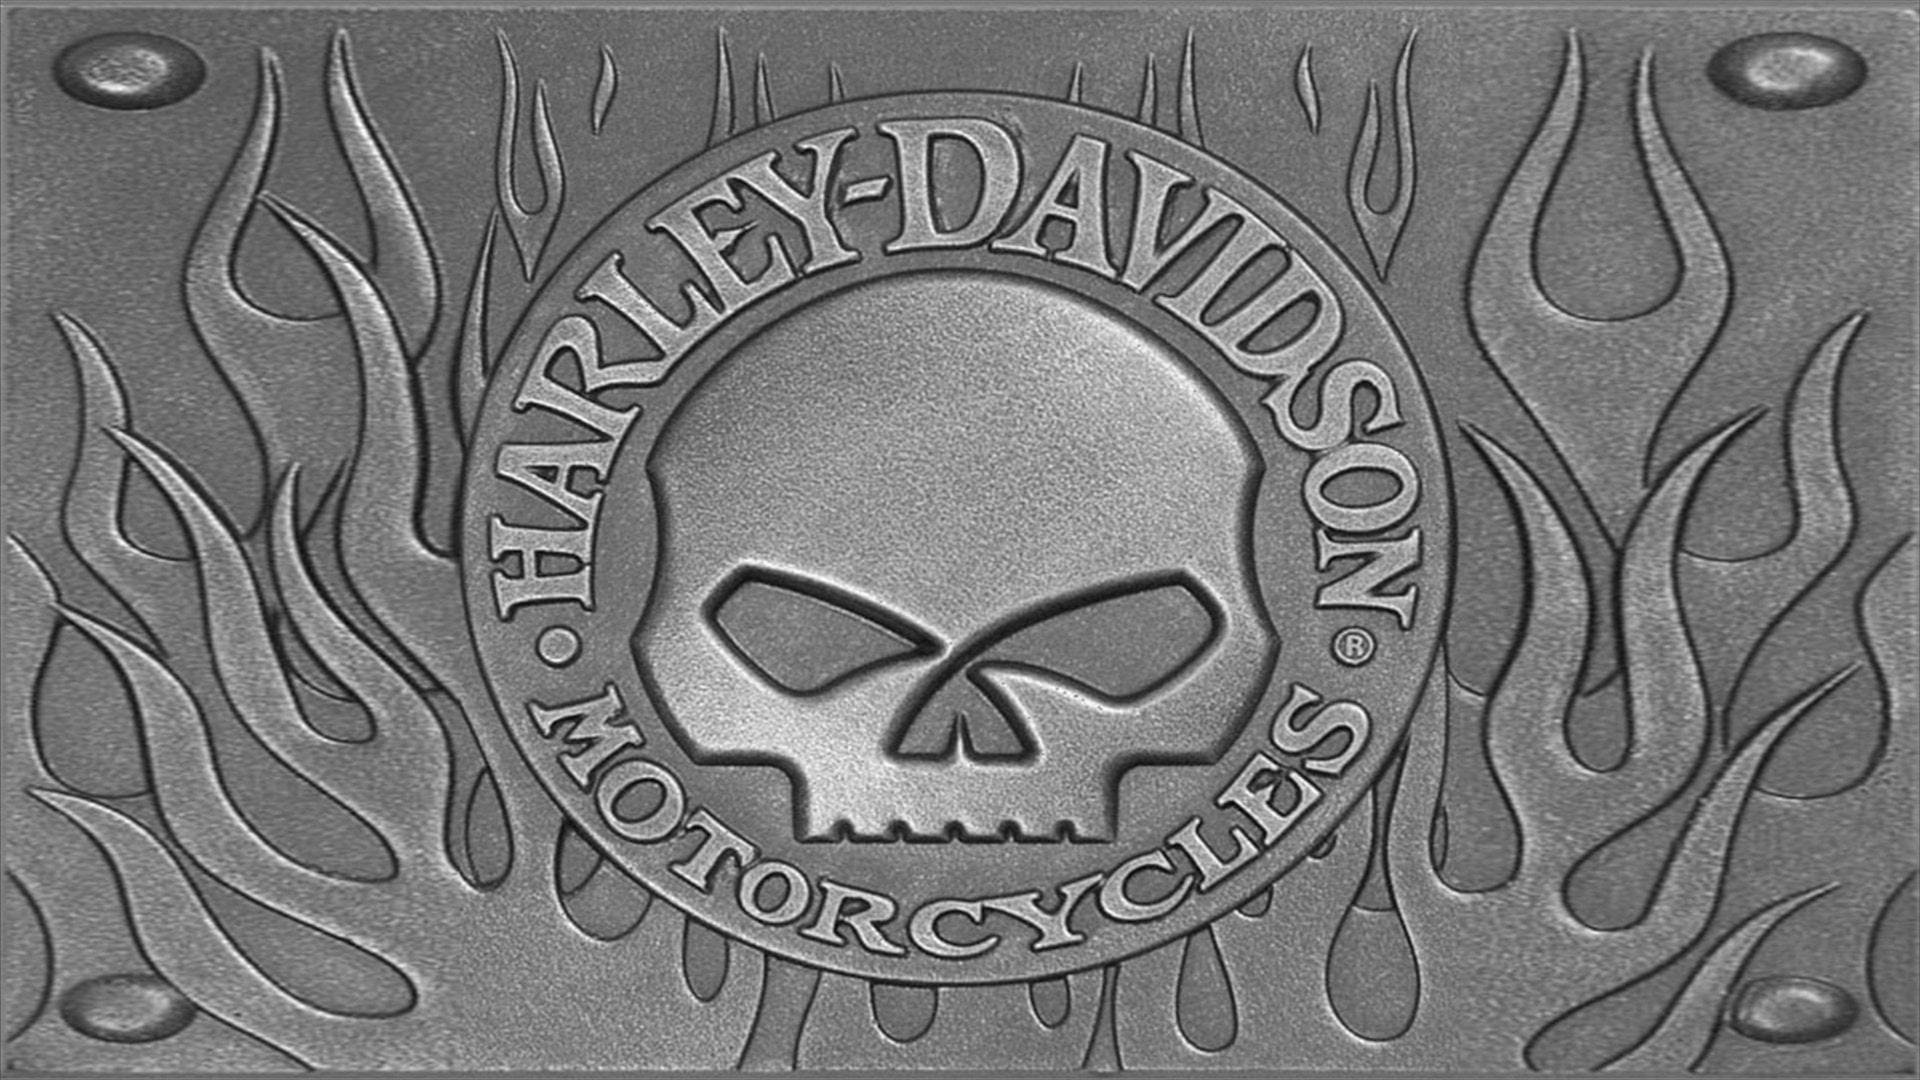 Silver Haley Davidson Motorcycle Emblem Wallpaper